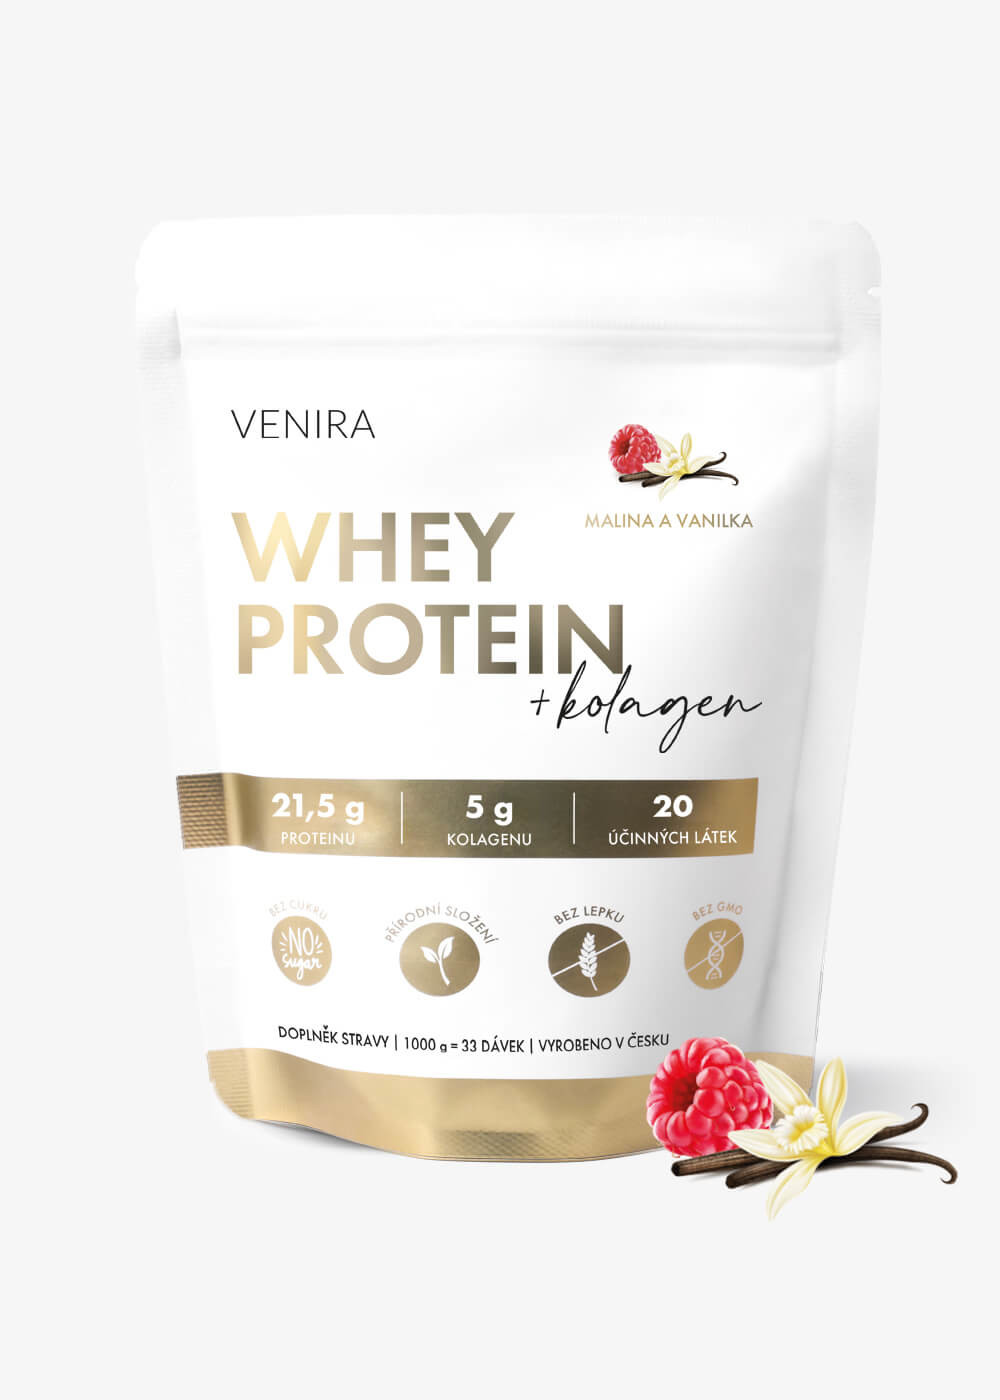 VENIRA whey protein, malina-vanilka, 1000 g